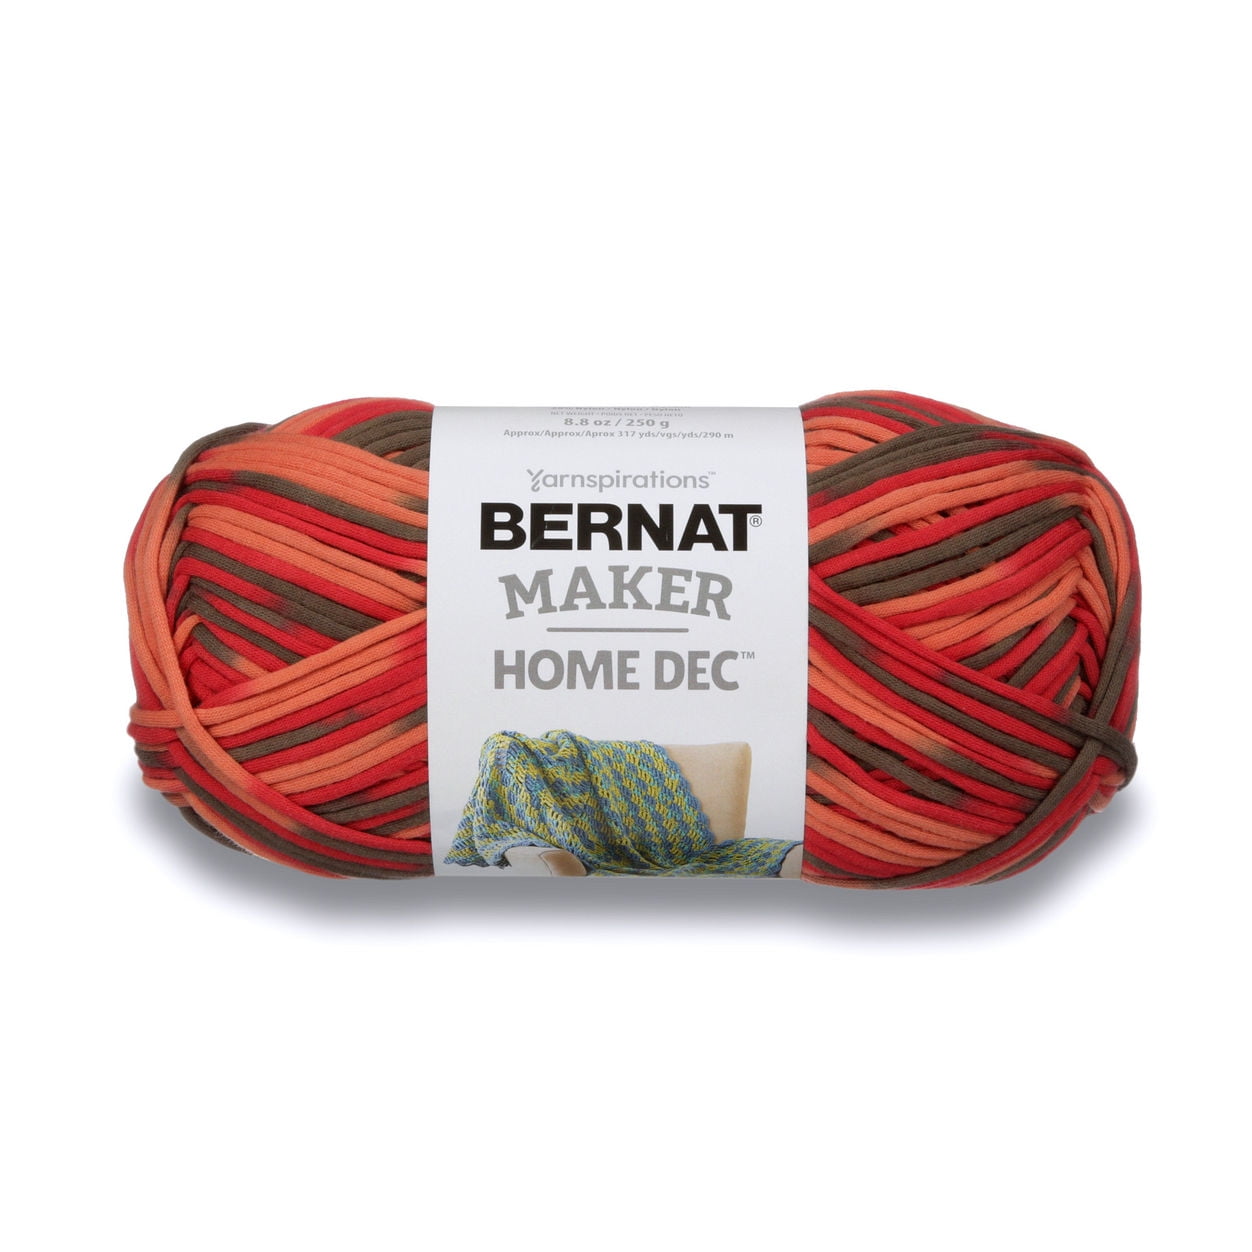 Bernat Bernat Maker Home Dec Yarn-Lilac Fence Variegate, 1 count - Ralphs